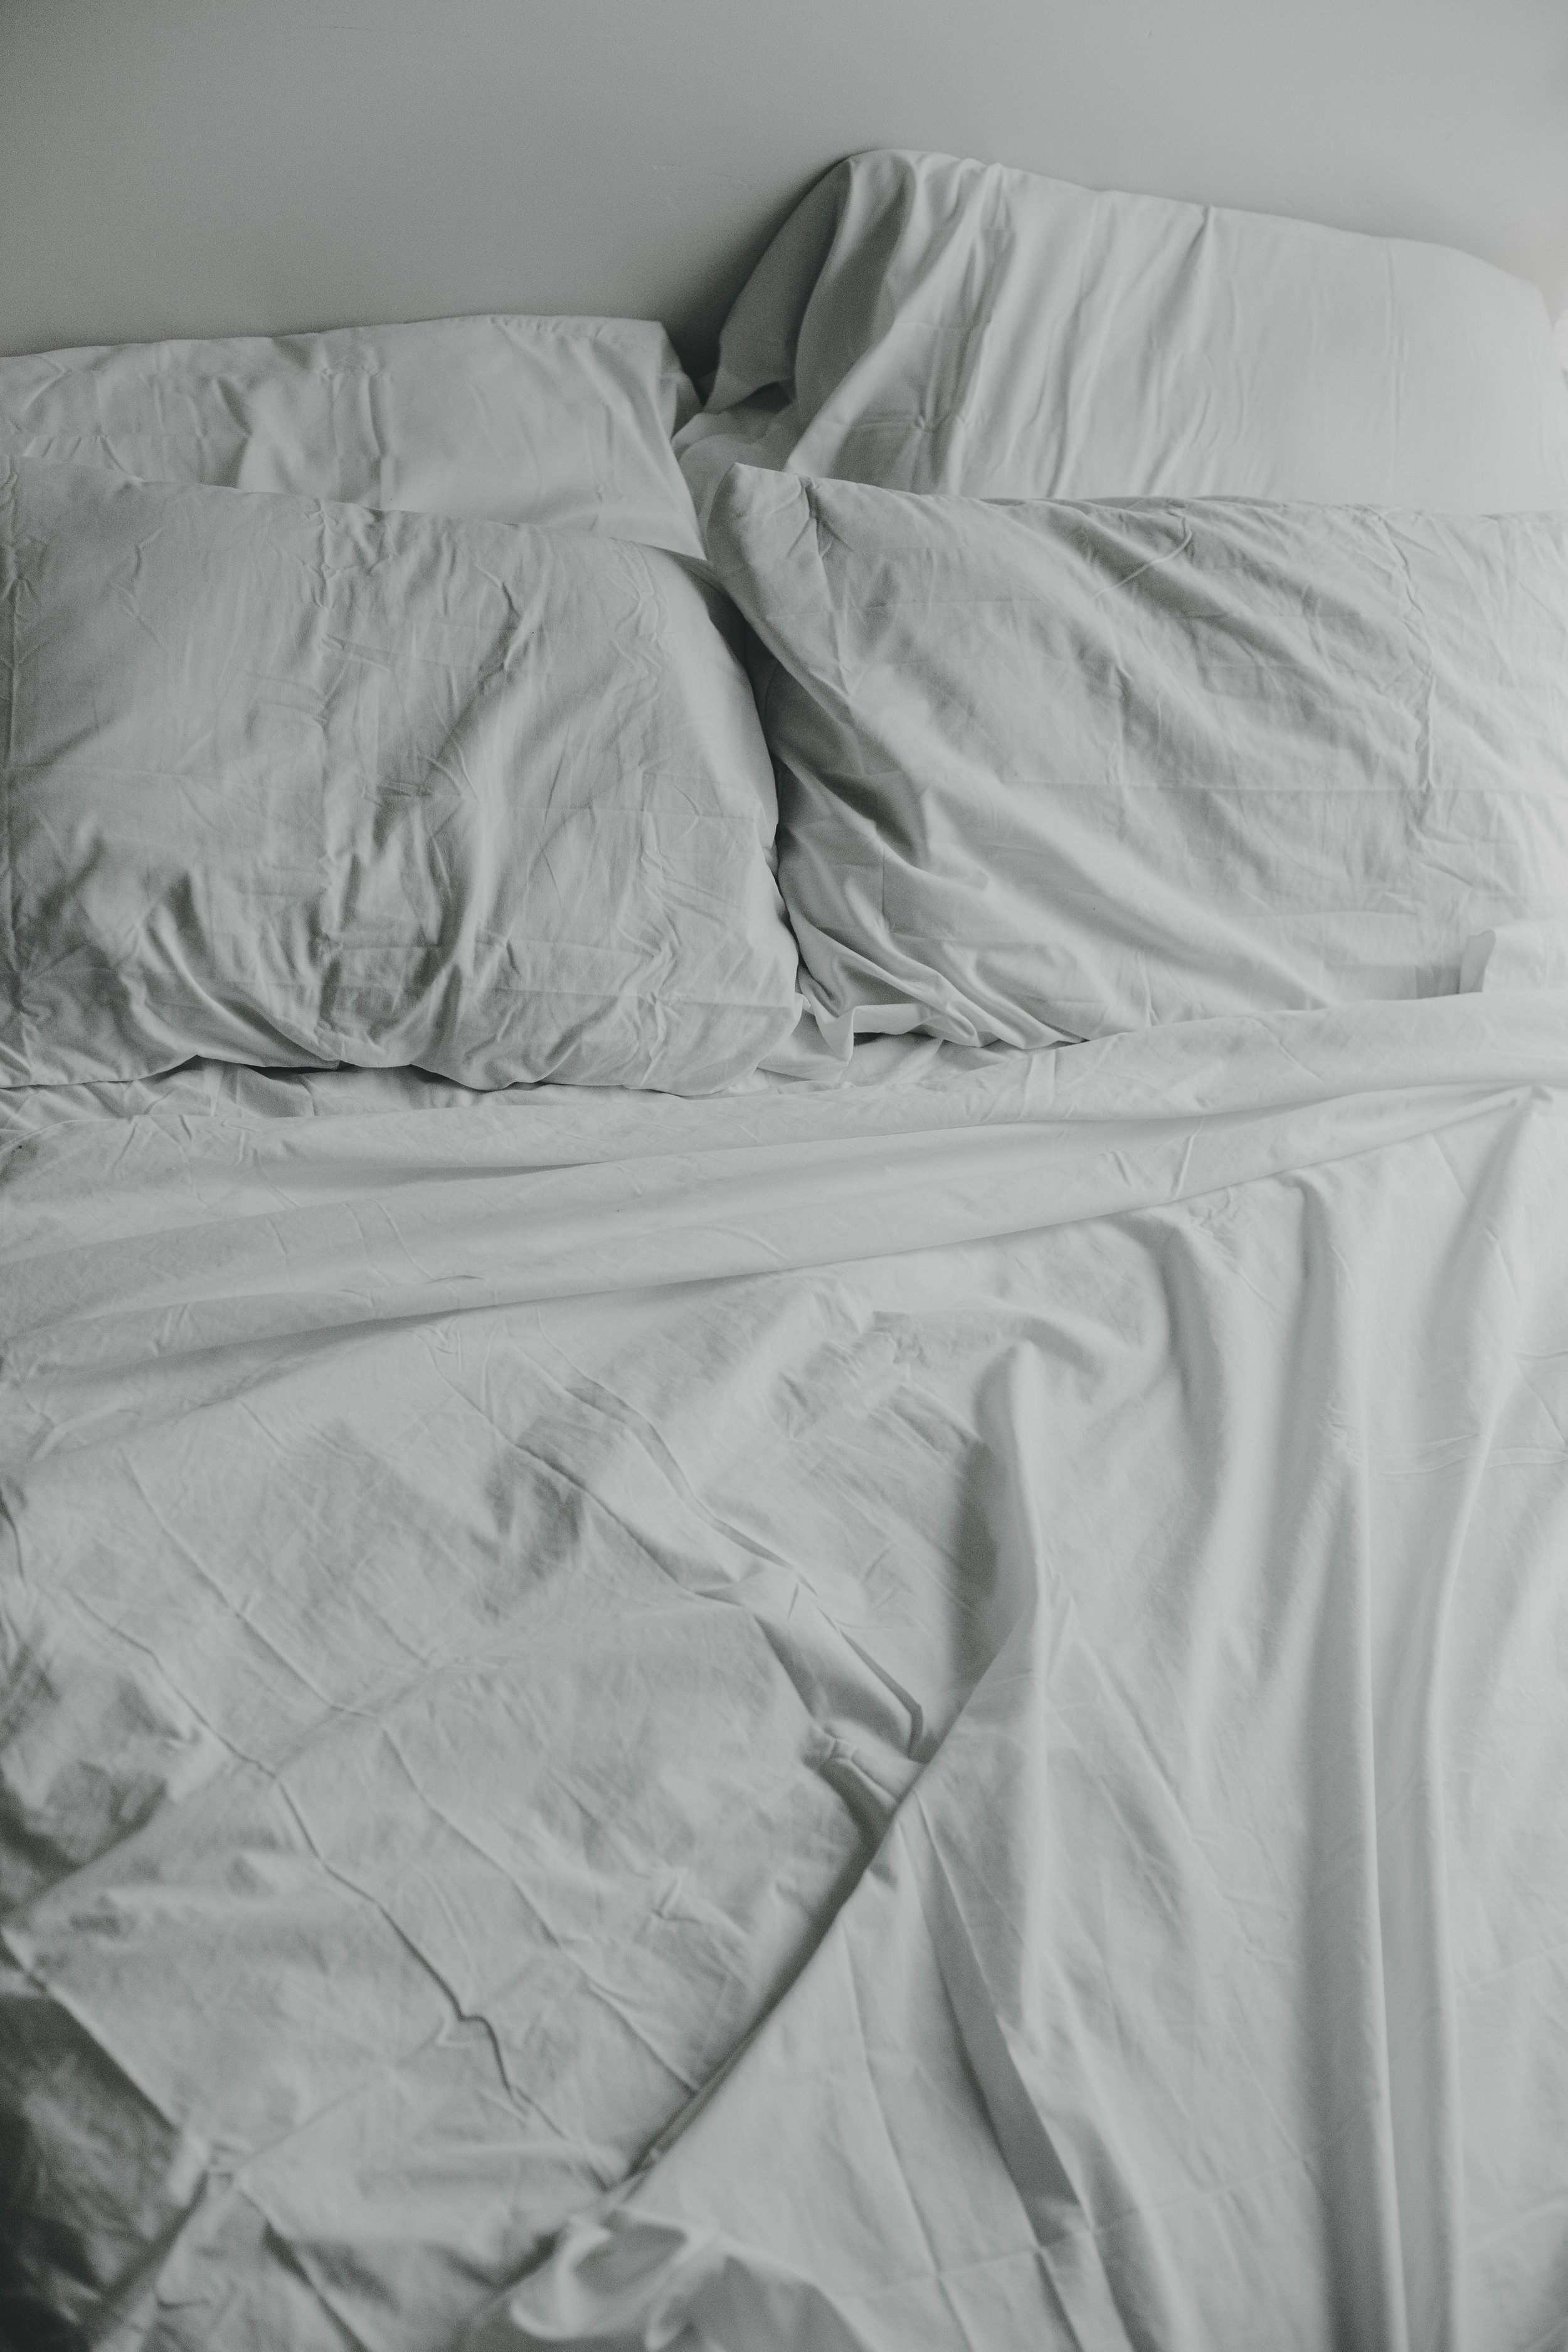 © duston-todd-lifestyle-empty-bed.jpg